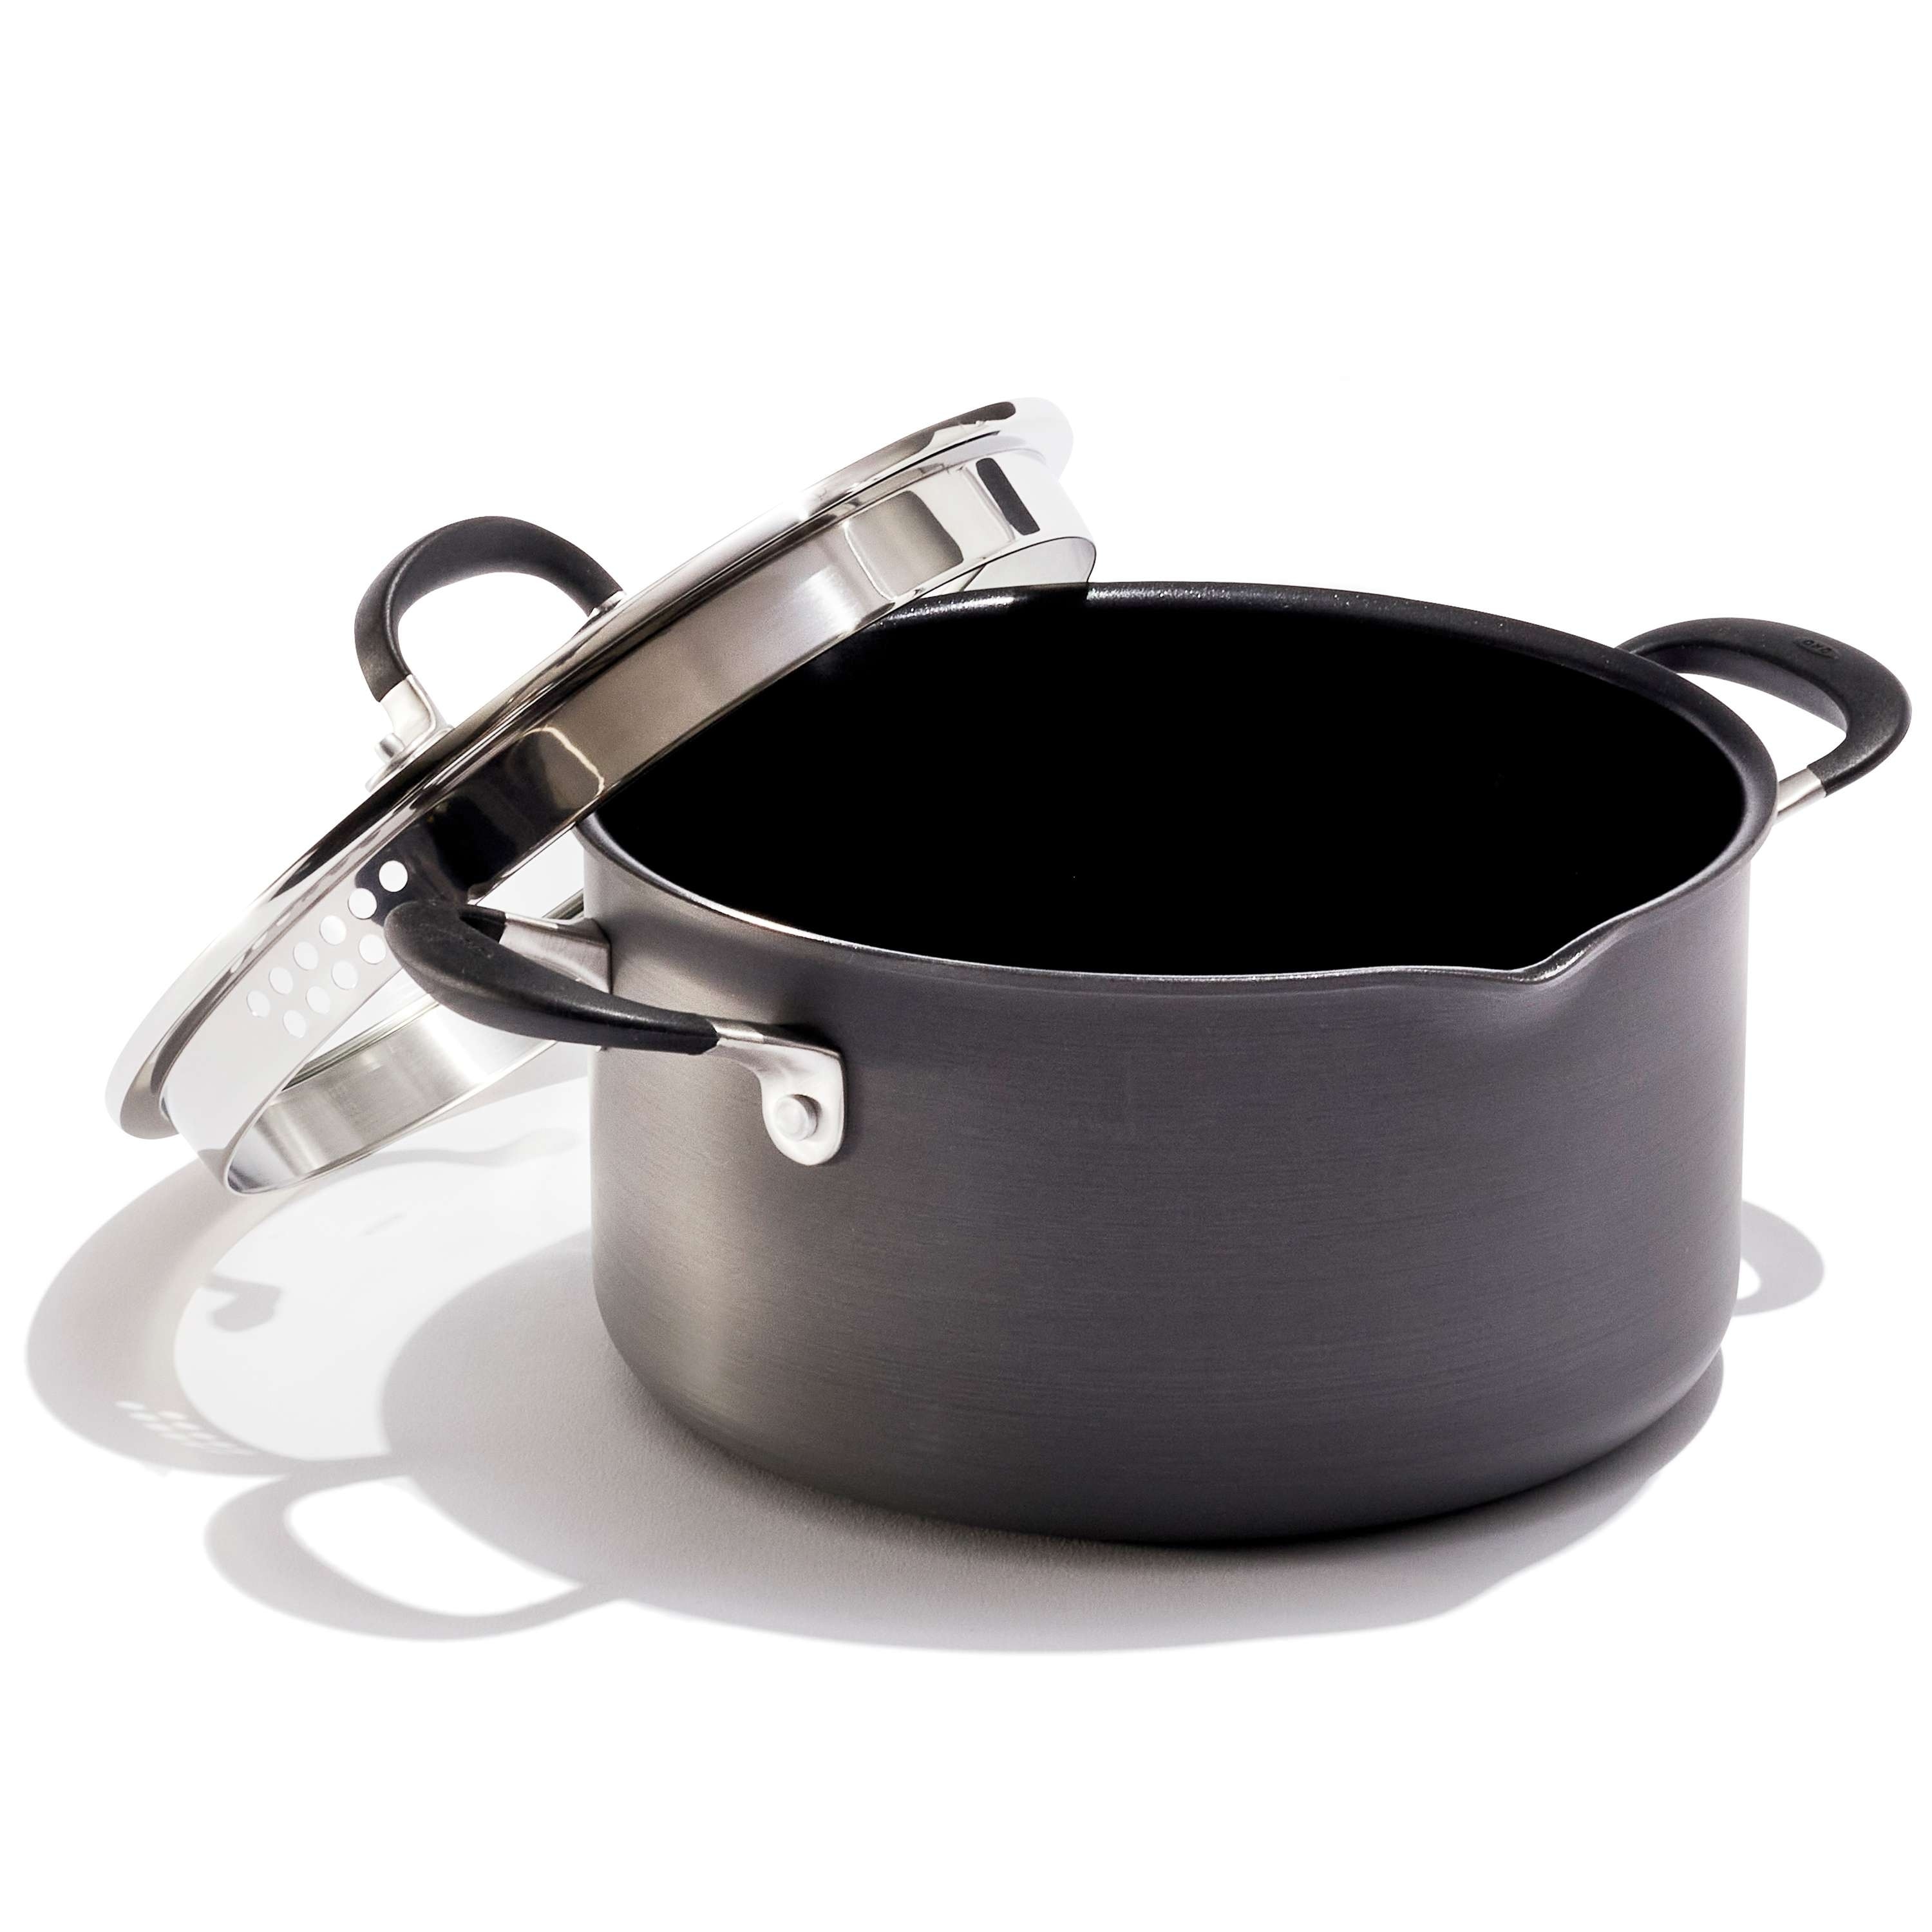 Style Nonstick Cookware Stockpot, 6-Quart